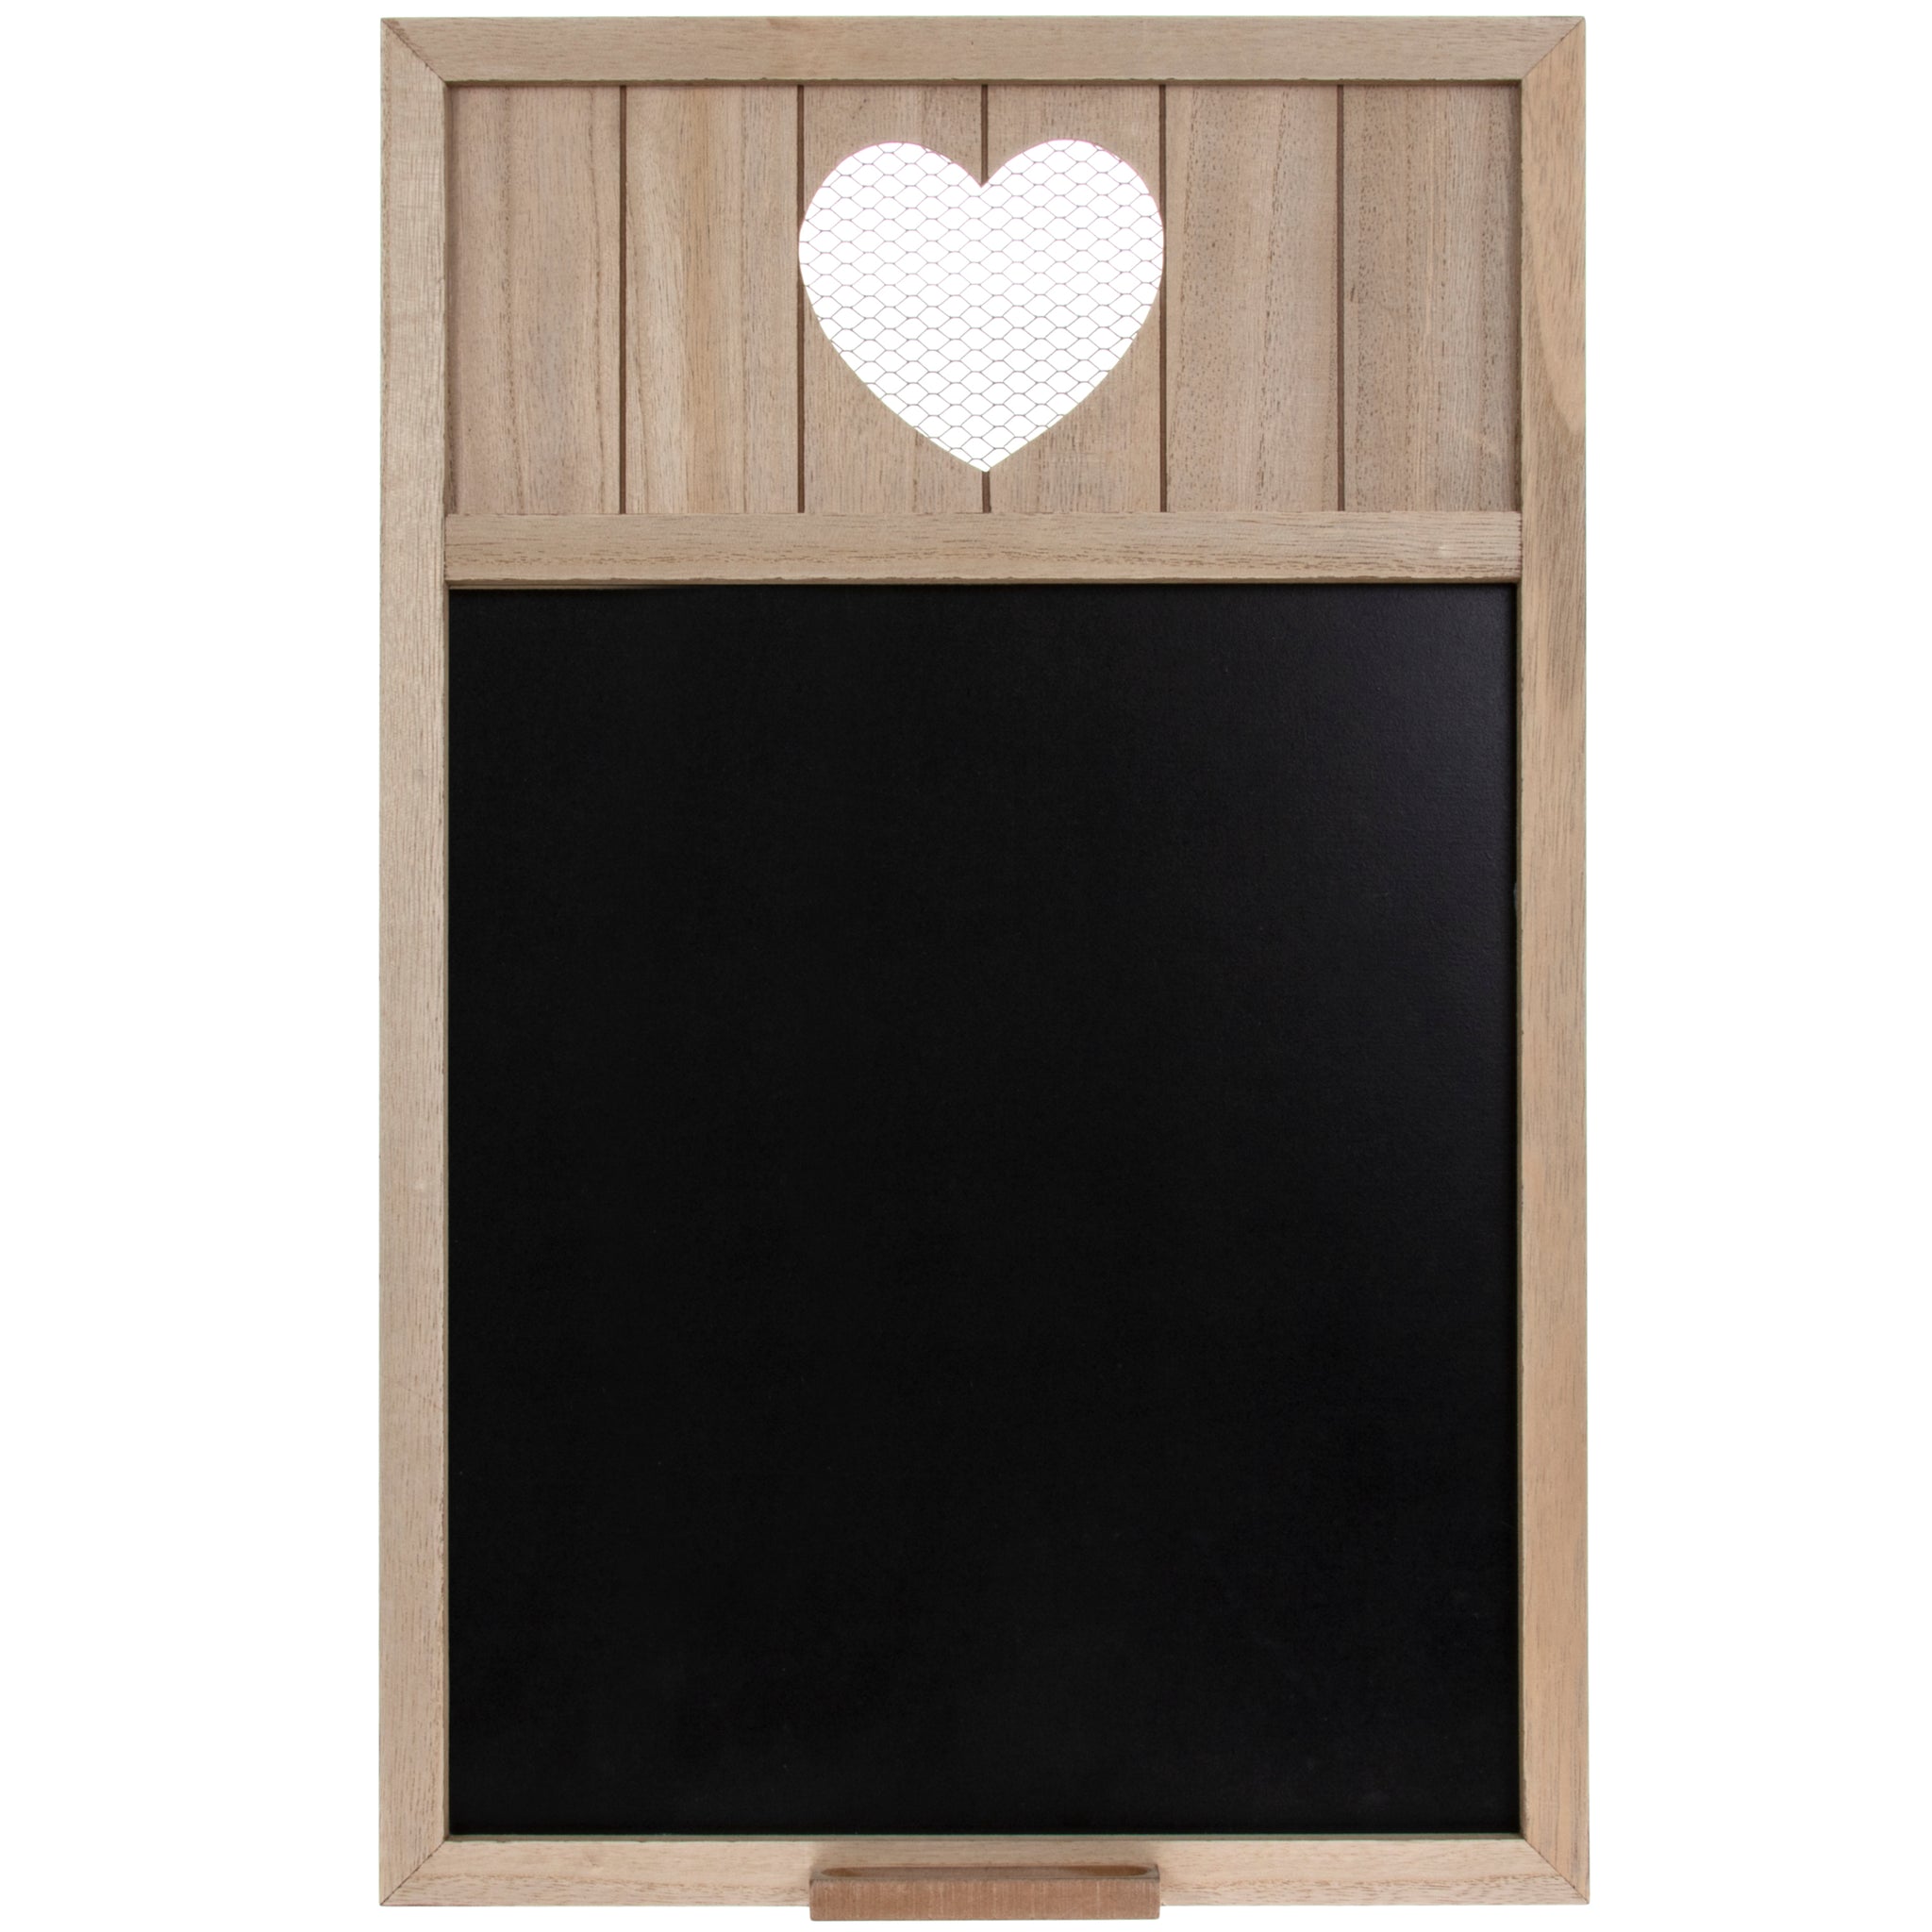 Wall Mounted Vintage Heart Wooden Blackboard with Chalk Duster